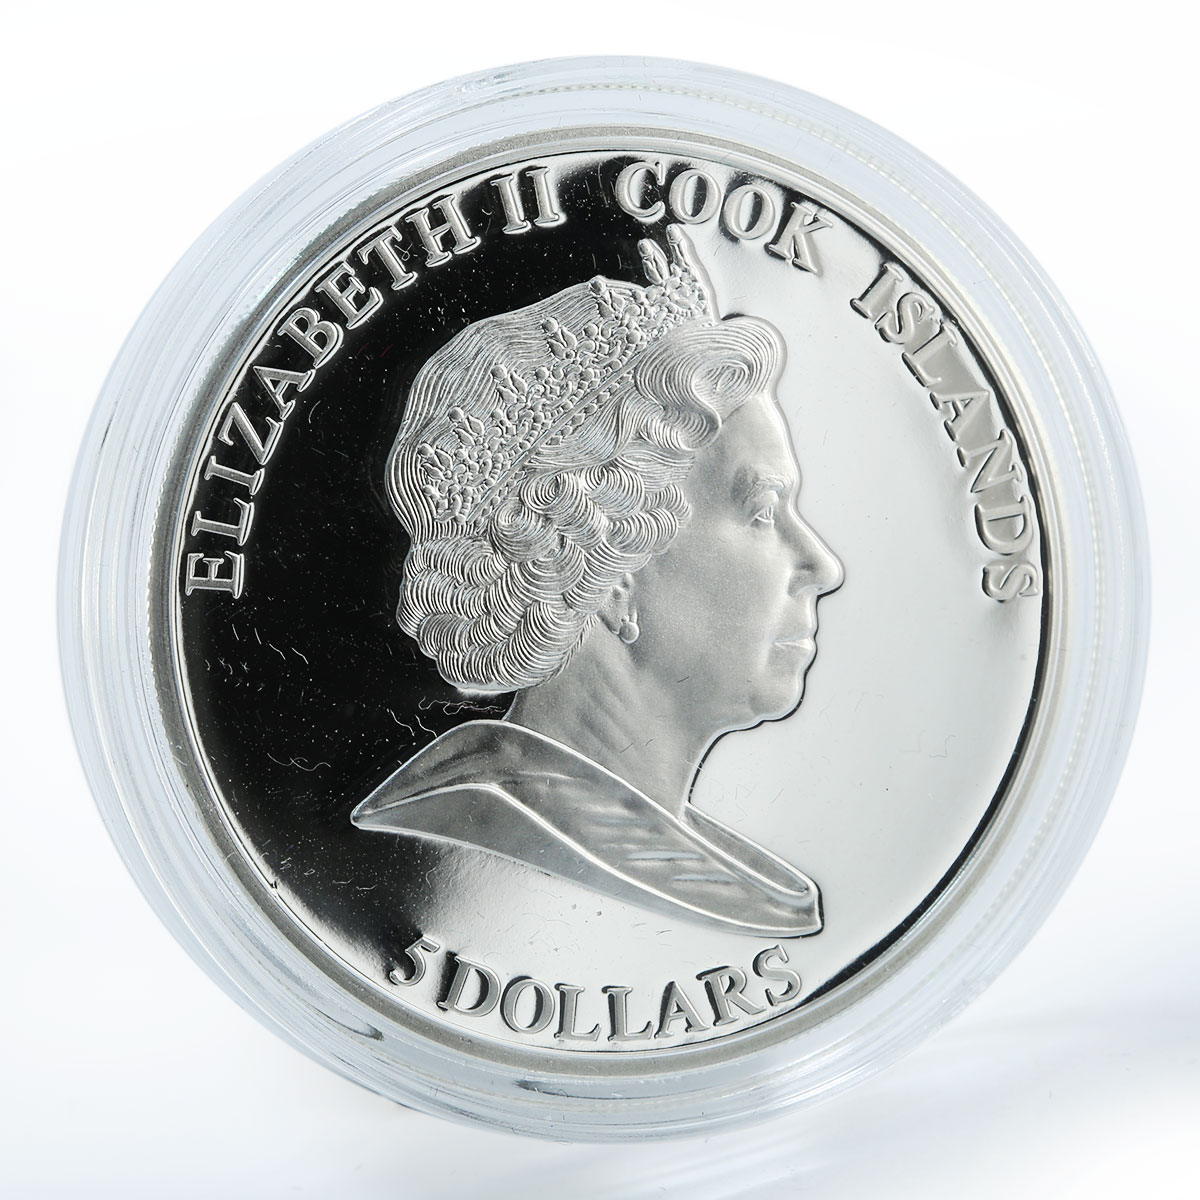 Cook Islands 5 dollars Hollywood Legends Sophia Loren proof silver coin 2011